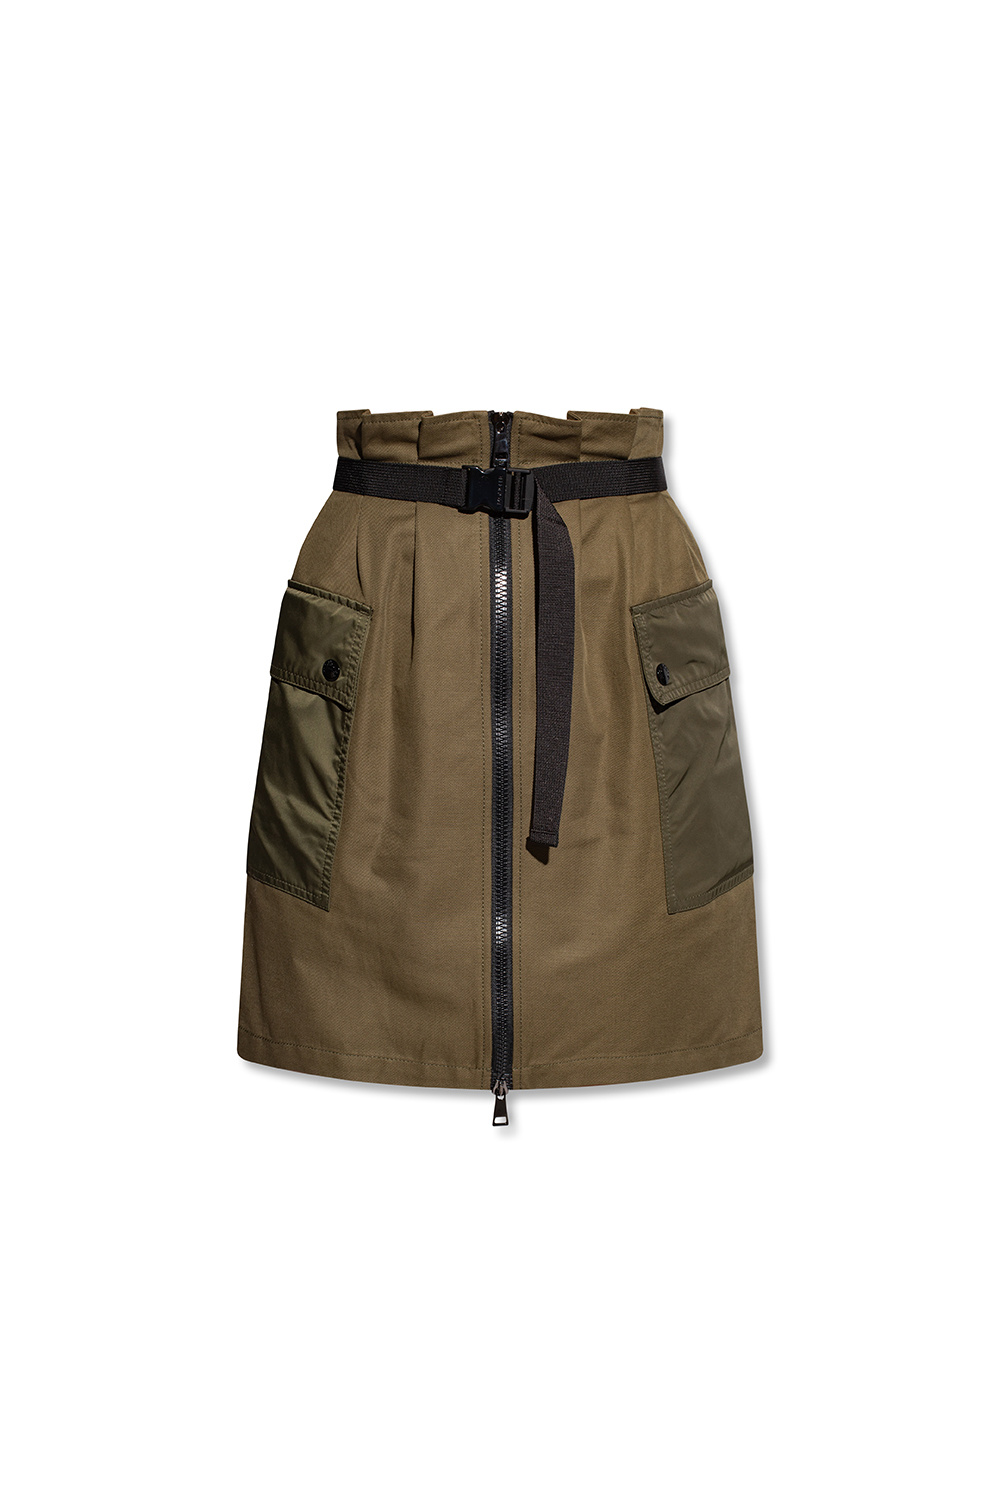 Moncler Cargo skirt